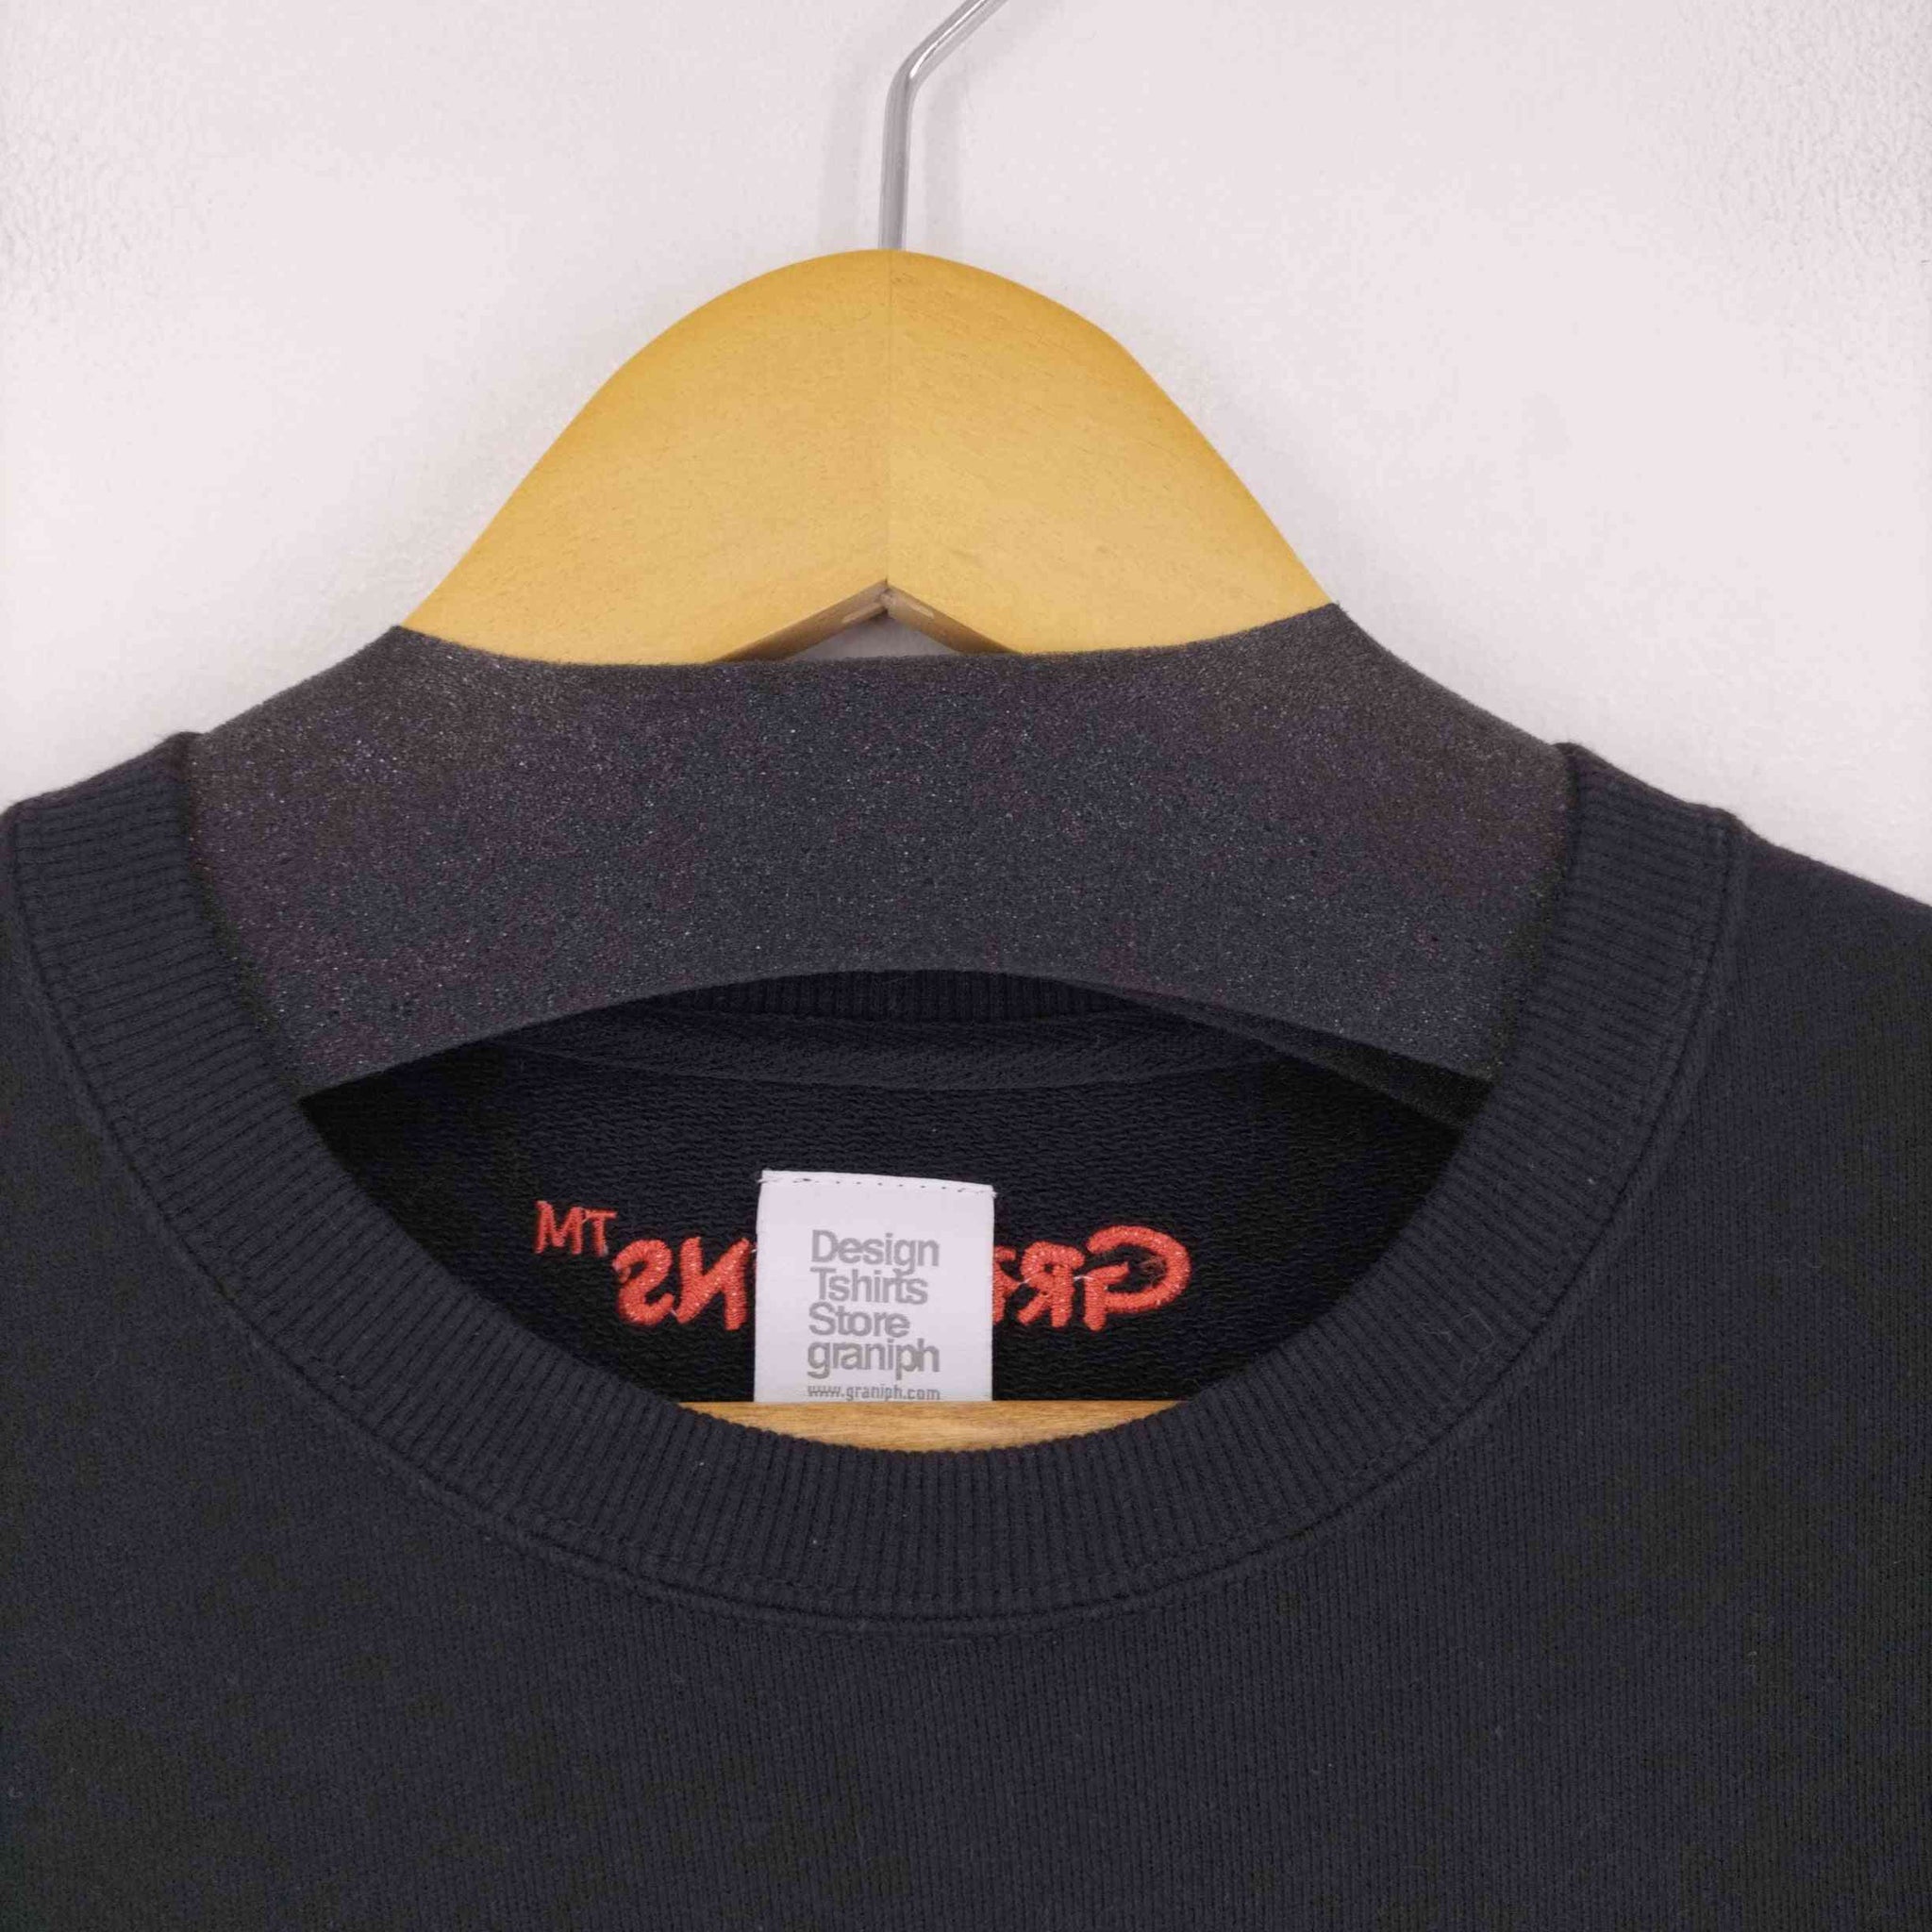 Design Tshirts Store graniph(デザインティーシャツストアグラニフ